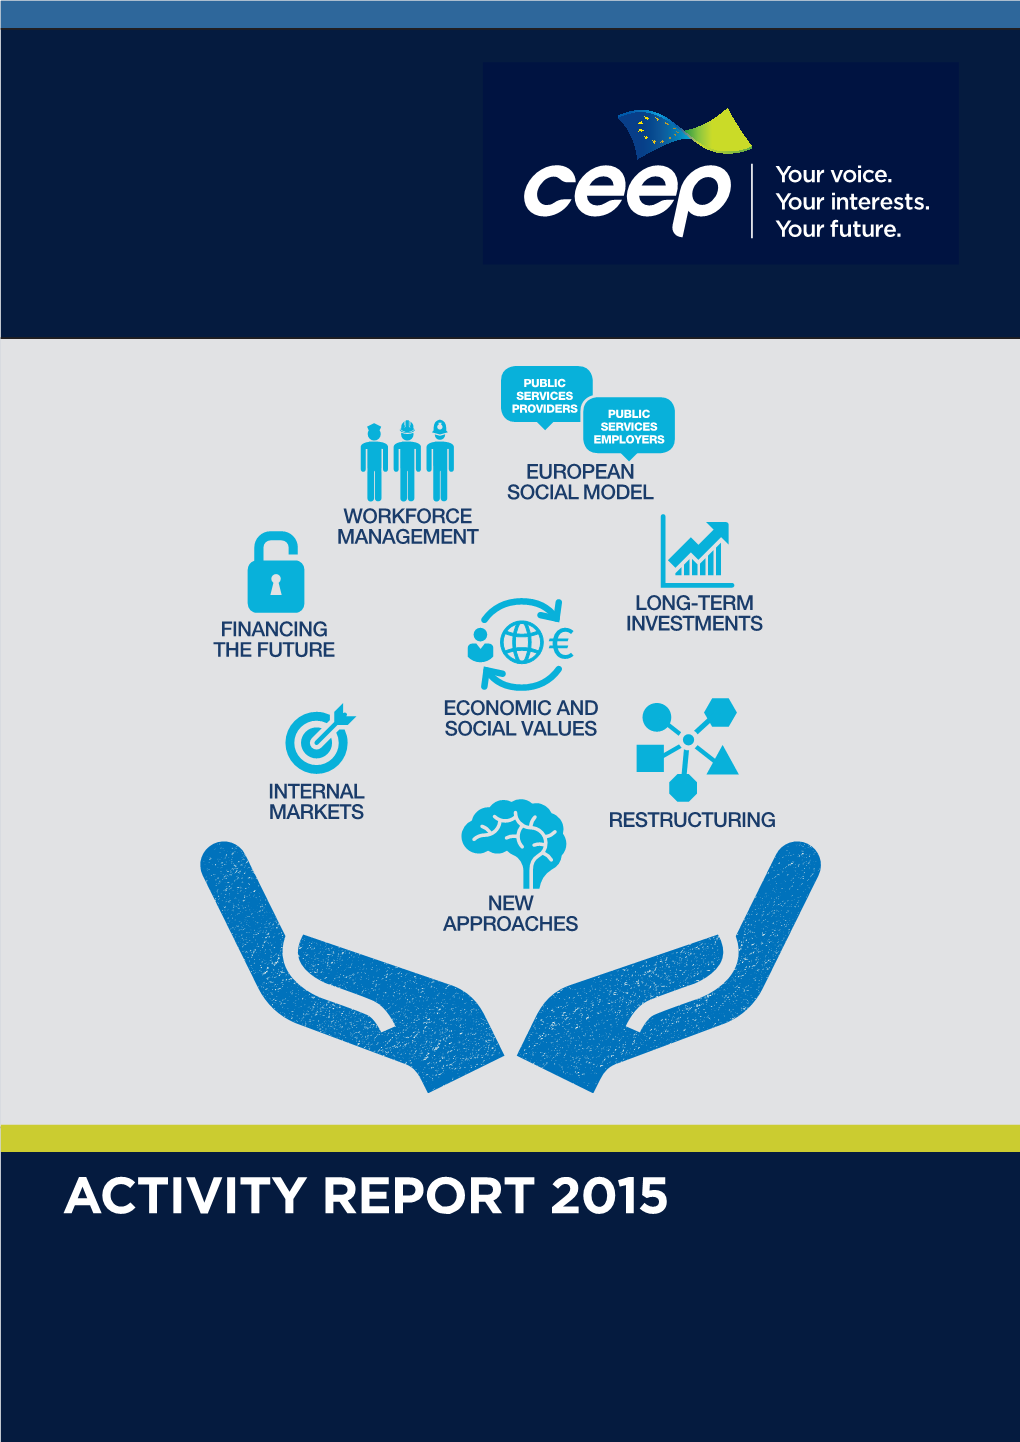 Activity Report 2015 Contents